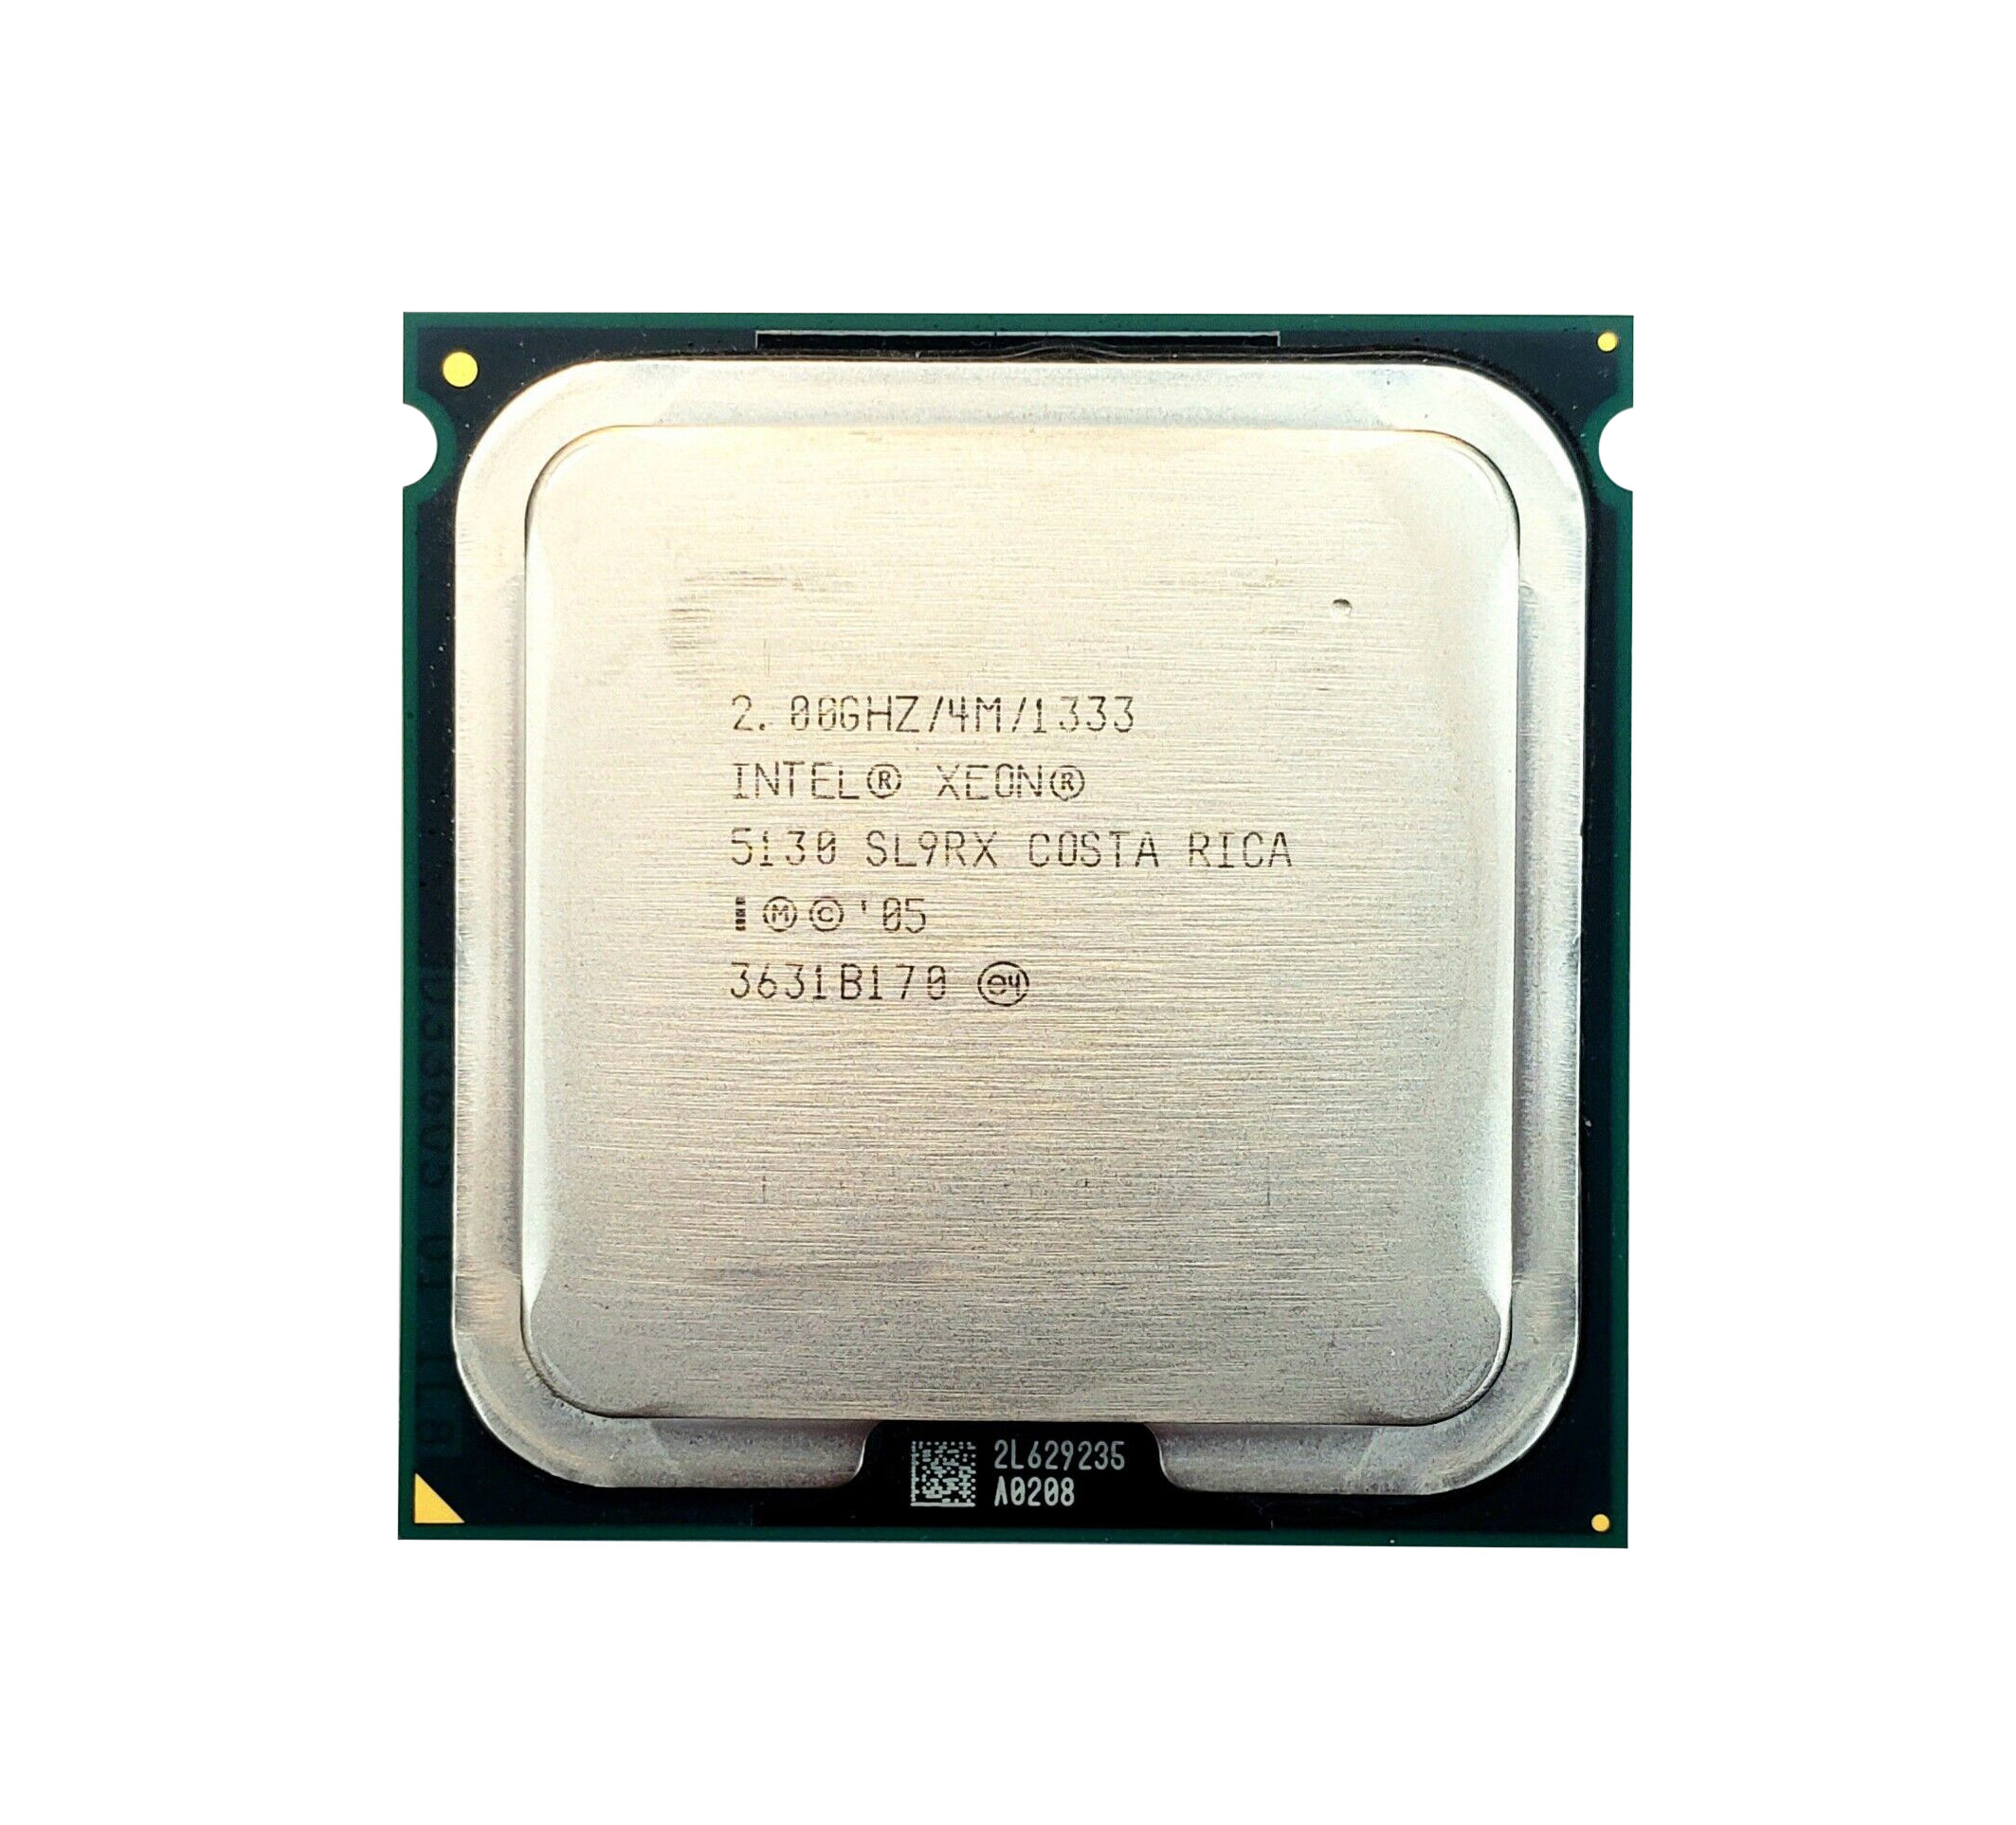 Intel BX805565130A Xeon 5130 Dual-core (2 Core) 2.0GHz 1333MHz FSB 4MB L2 Cache Socket LGA771 Processor